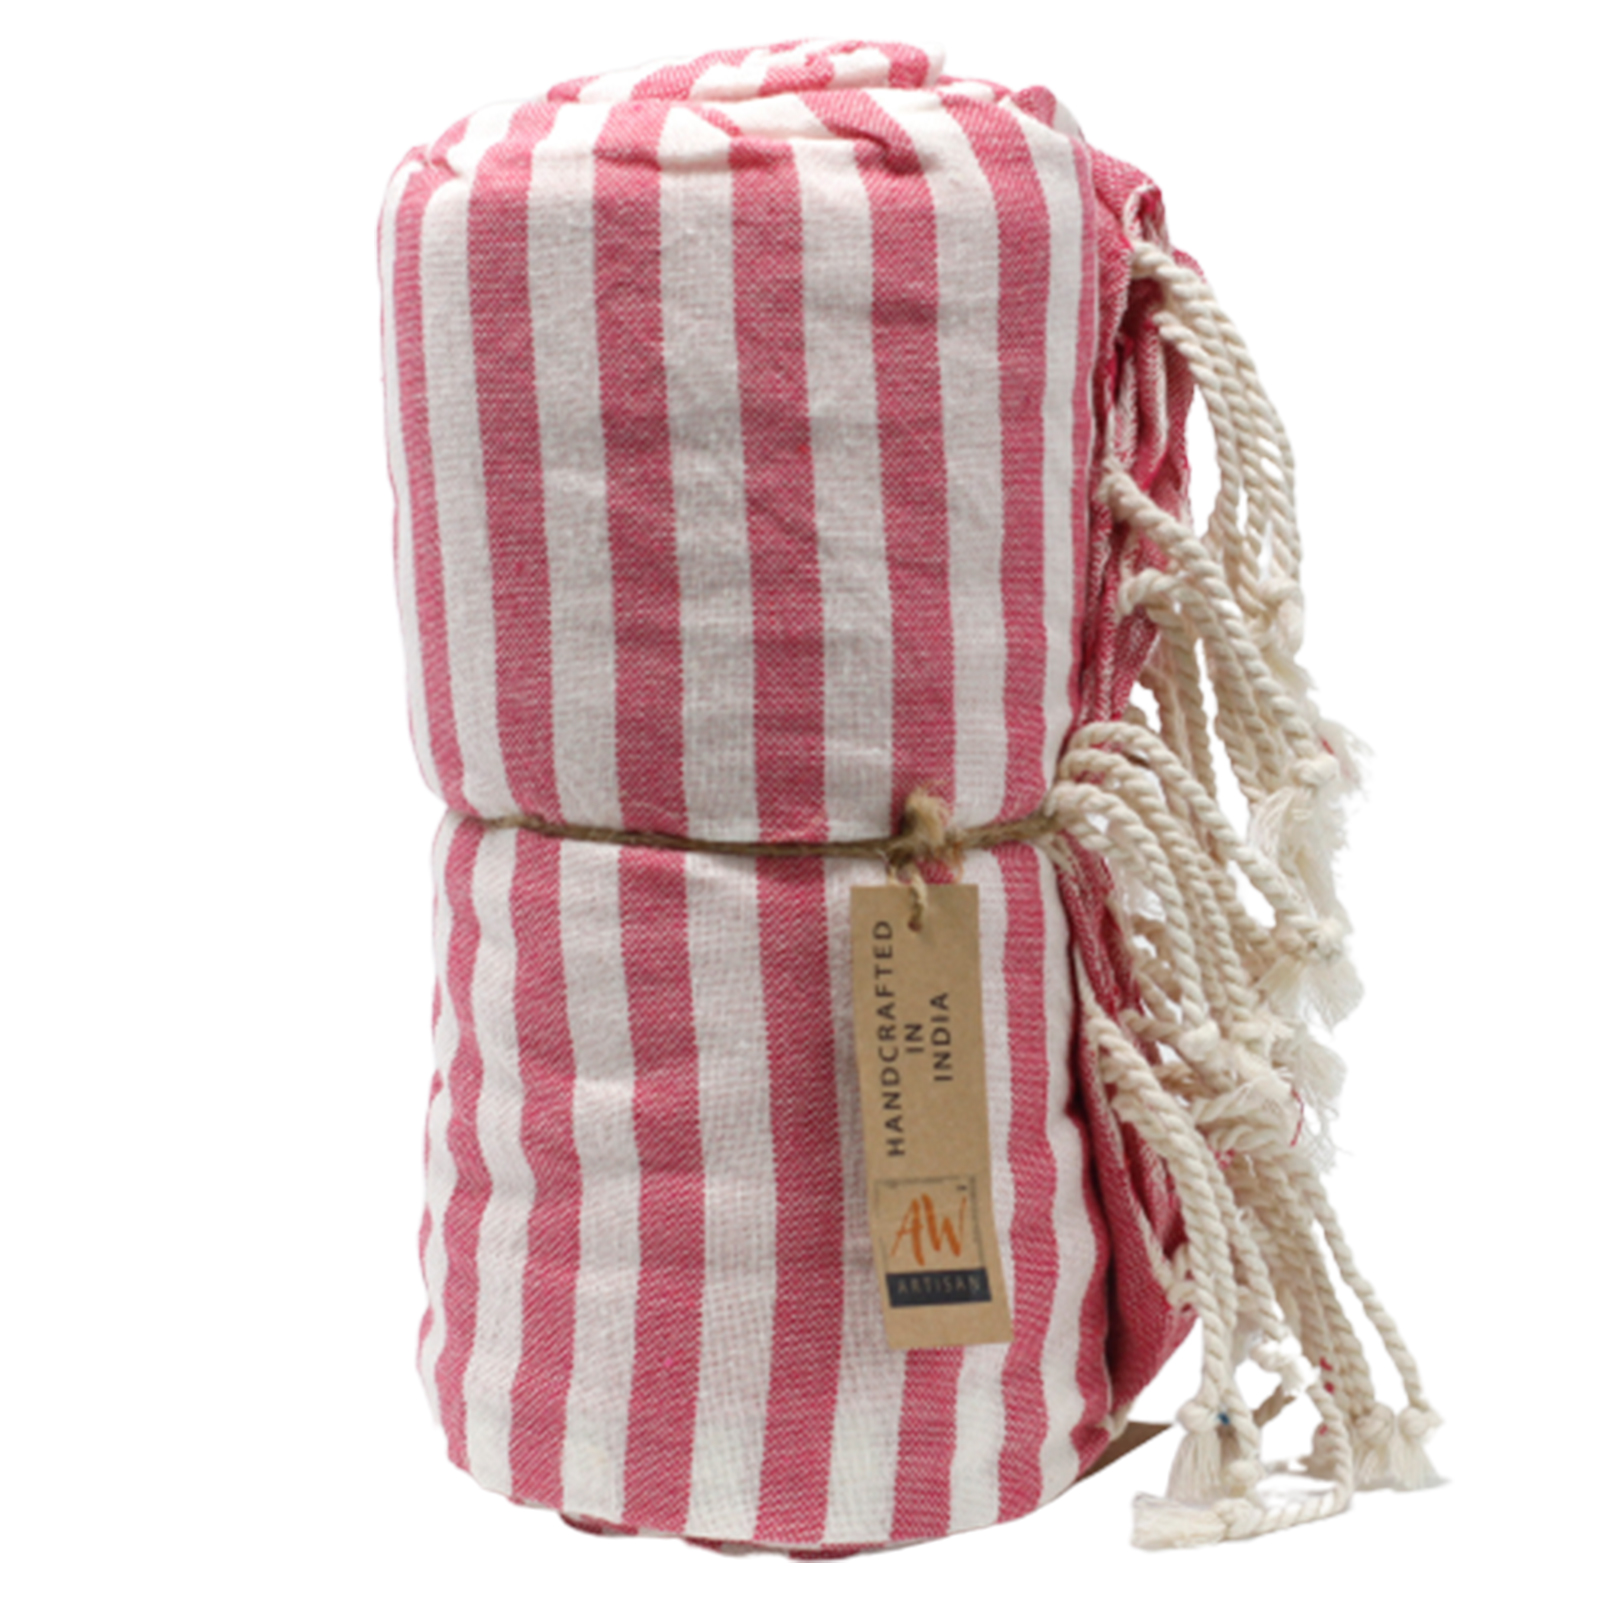 Cotton Pario Towel - 100x180 cm - Hot Pink - Click Image to Close